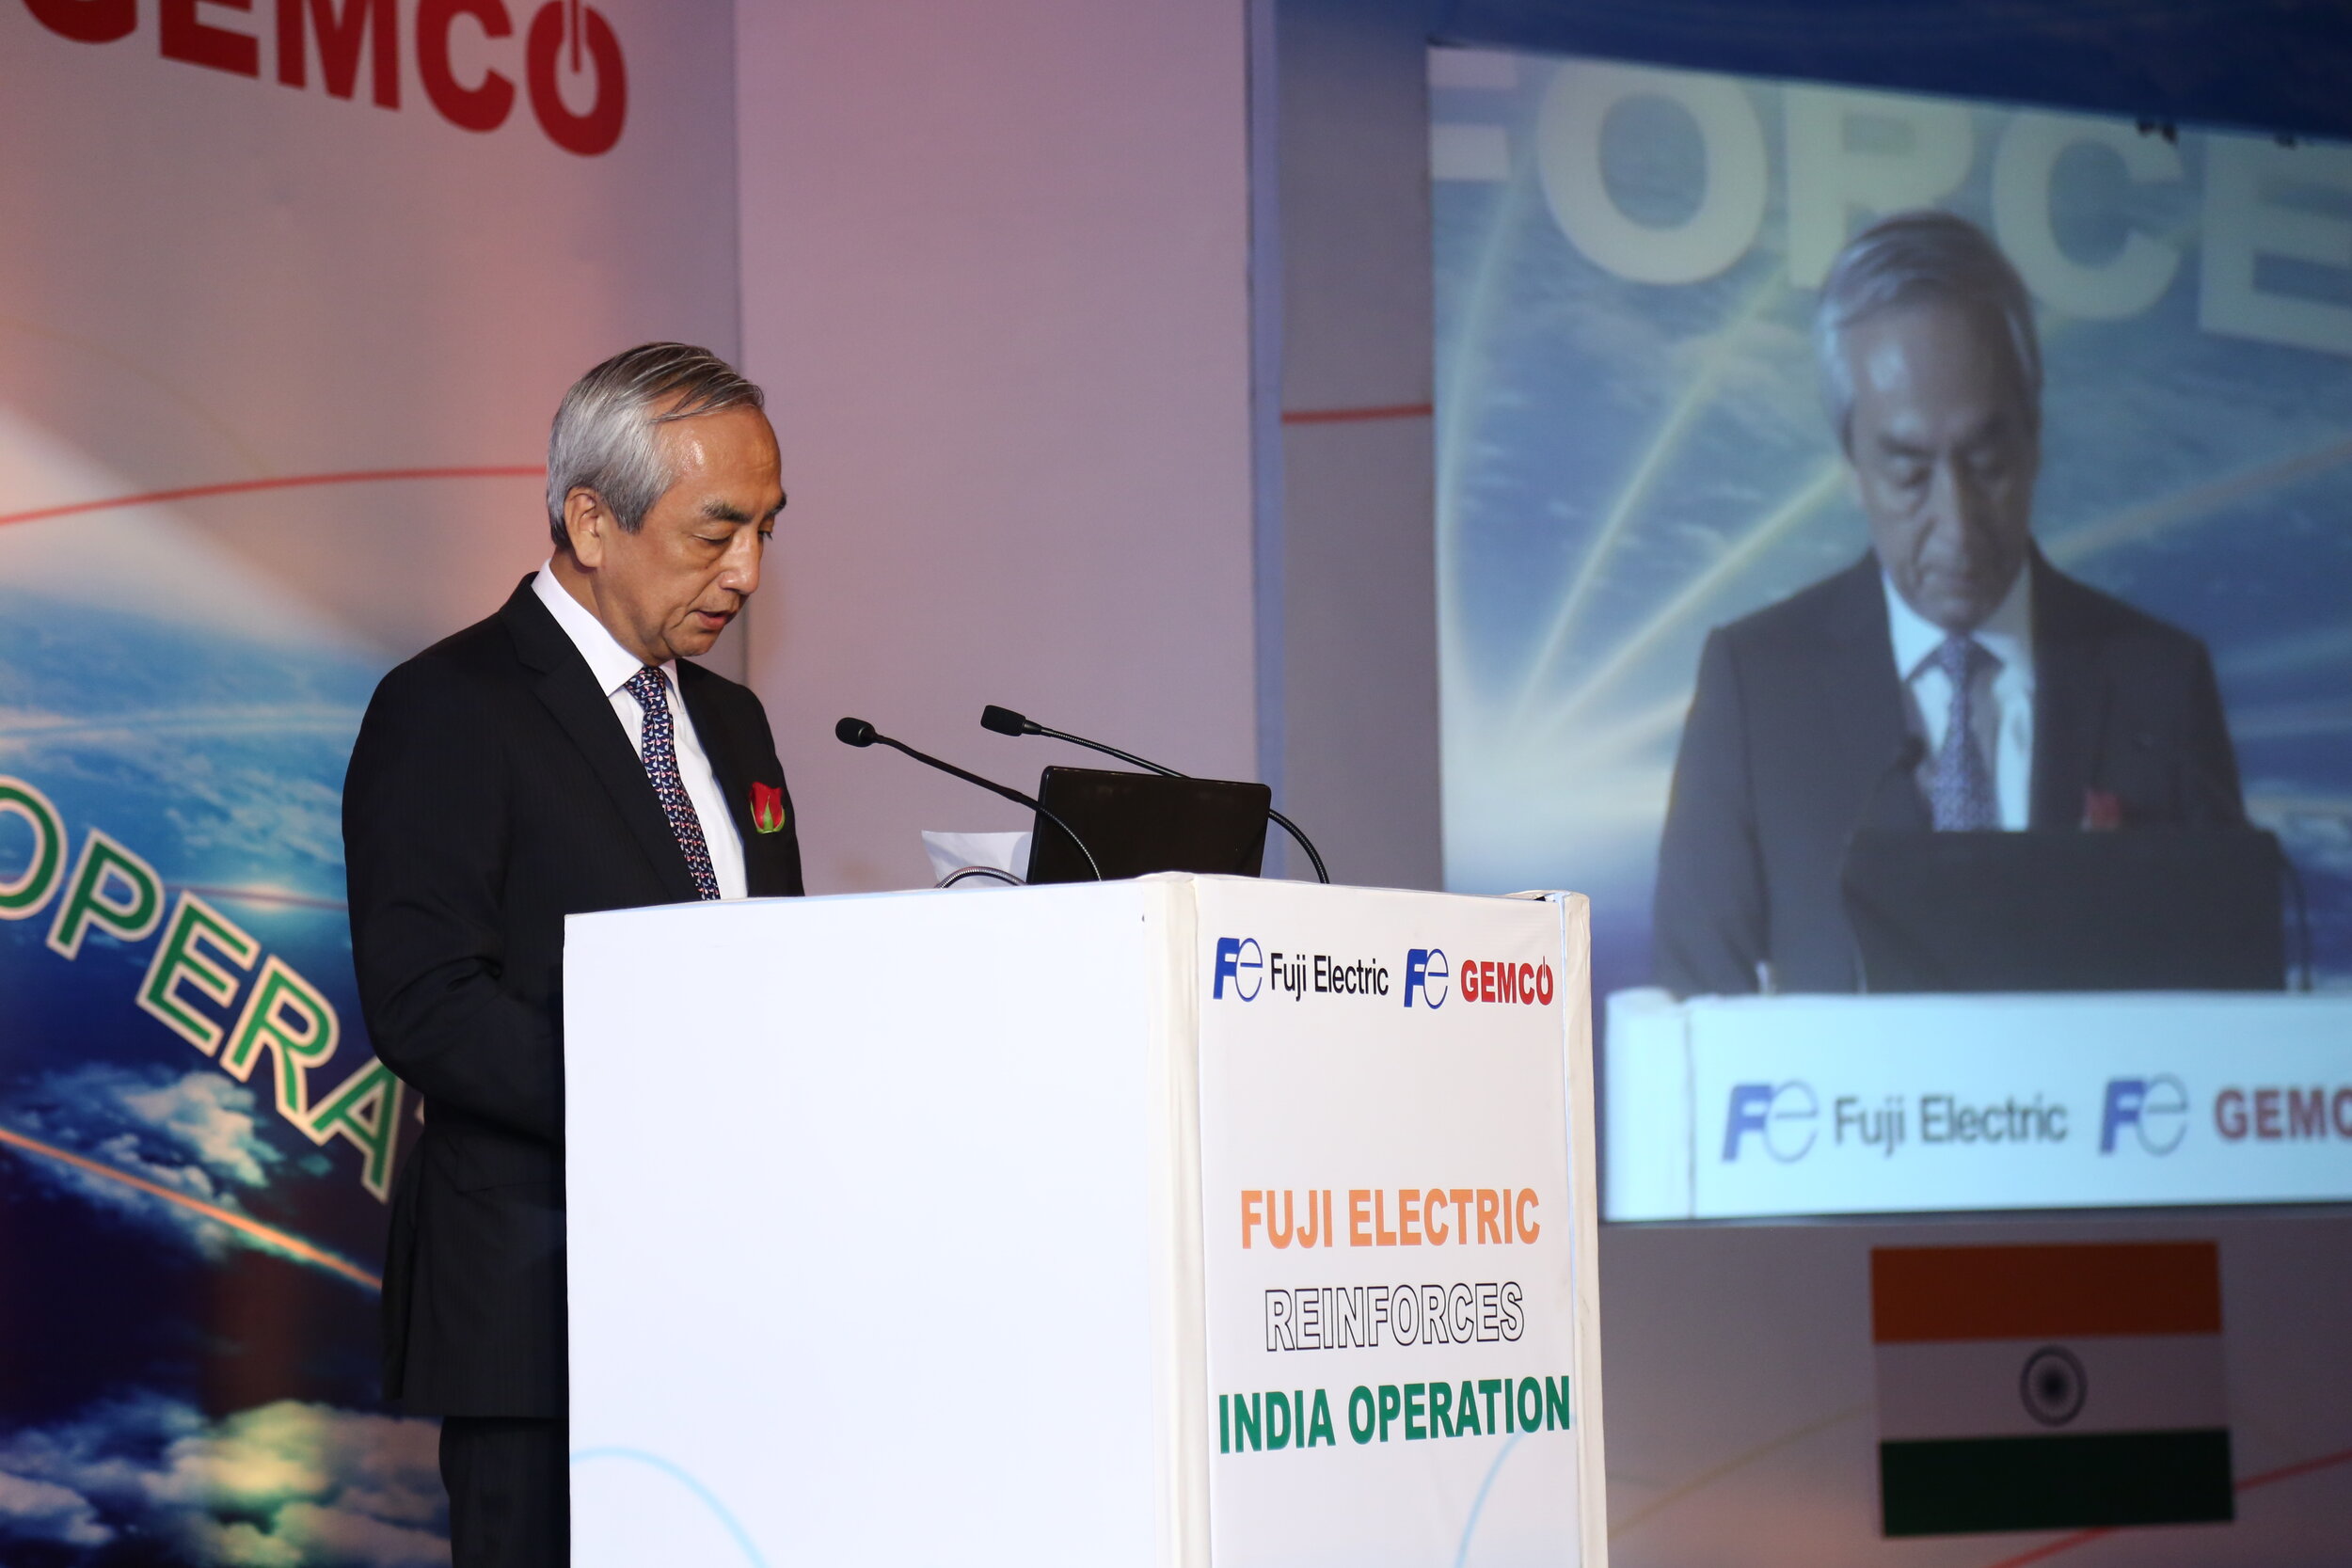 Fuji Electric Reinforces India Operations Press Meet &amp; Cultural Show - Corporate Social Event